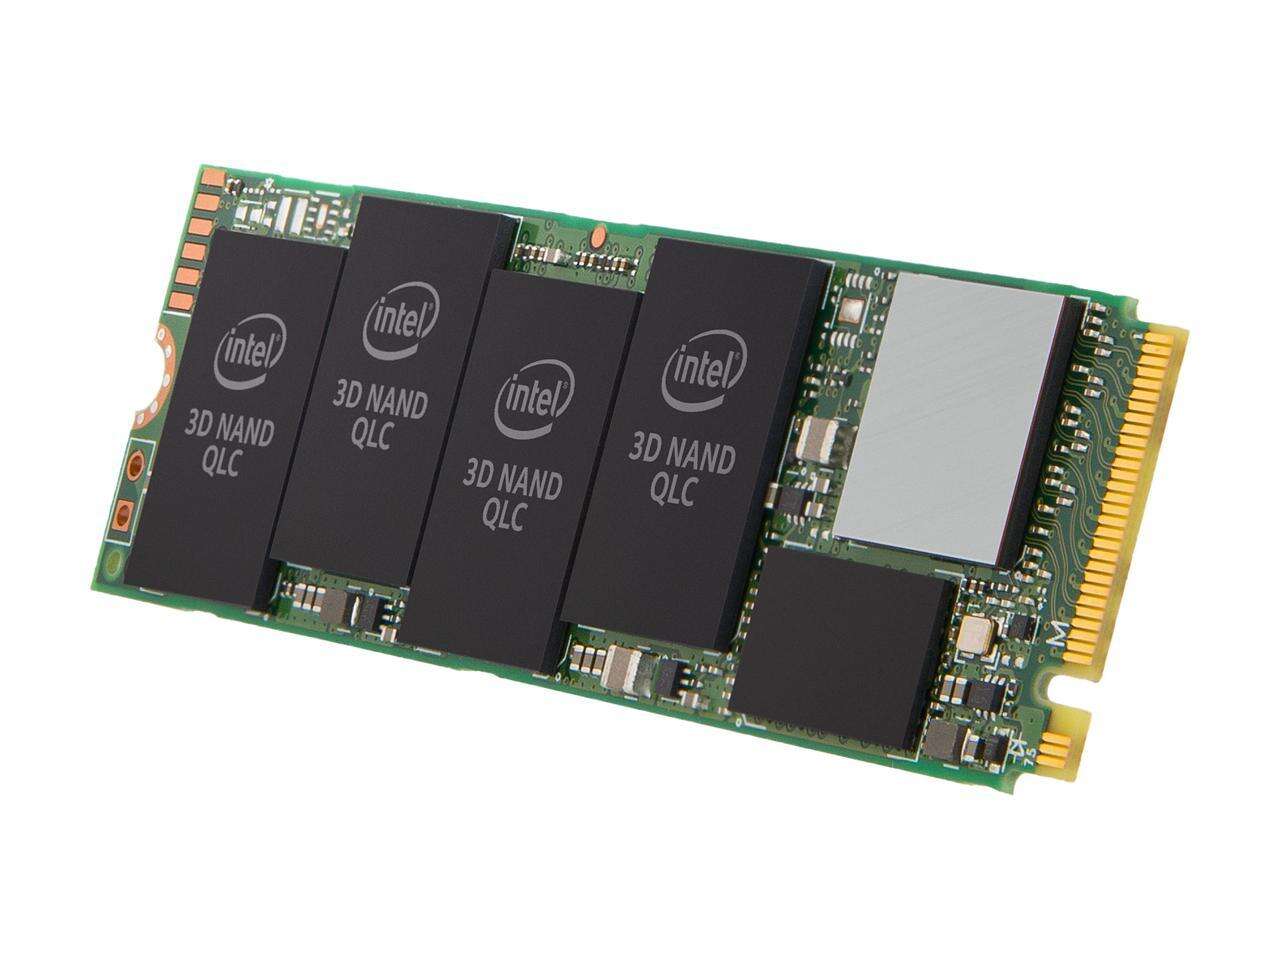 Intel 660P SSD NVMe Gen3 with DRAM